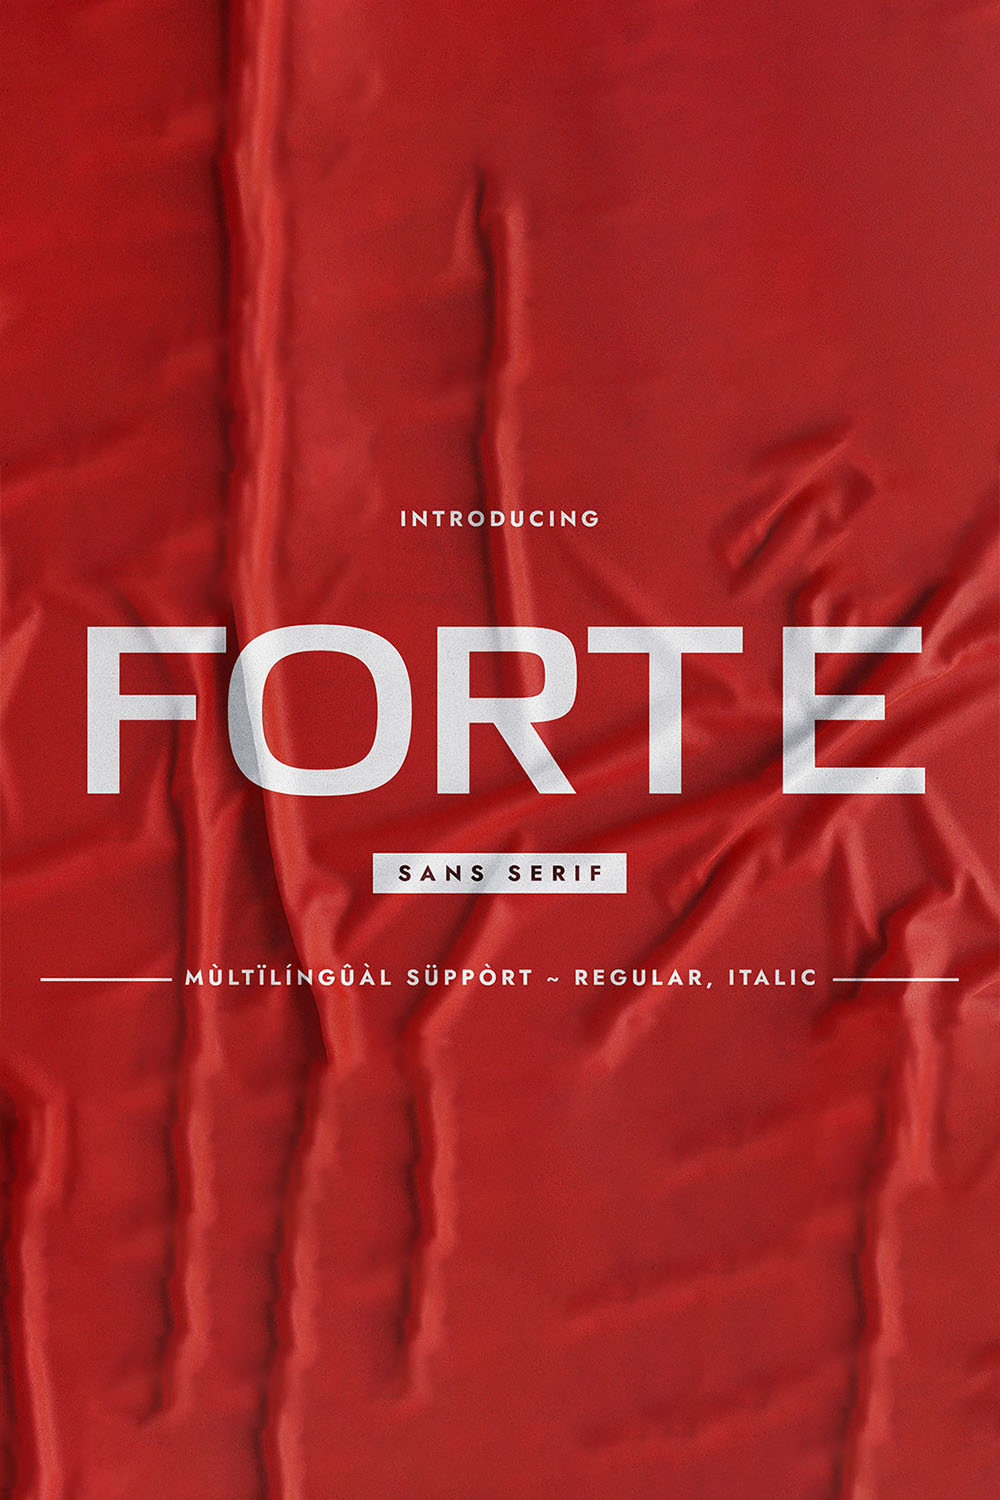 Forte Sans Serif Font Pinterest image.